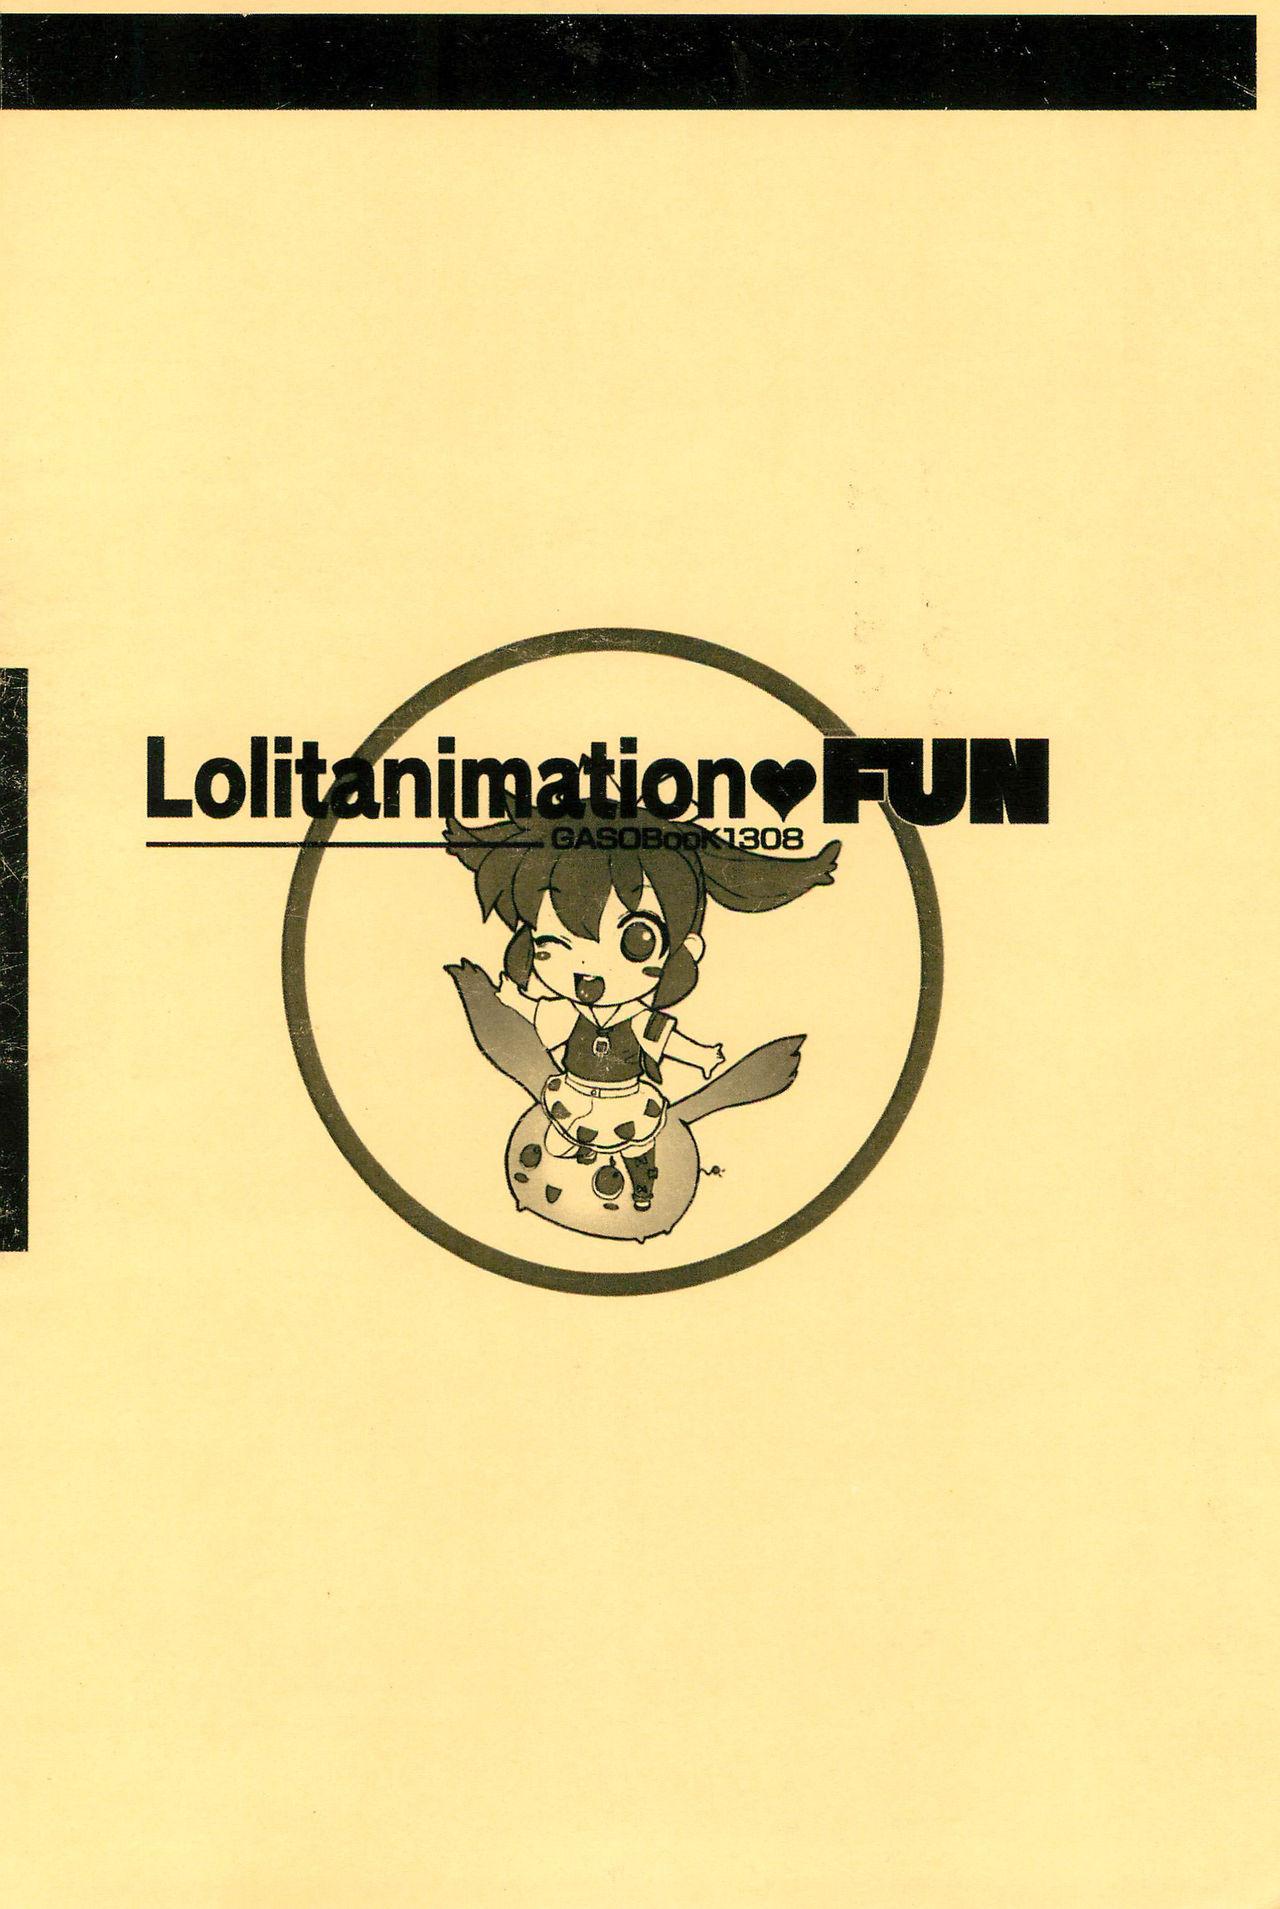 Lolitanimation FUN 11